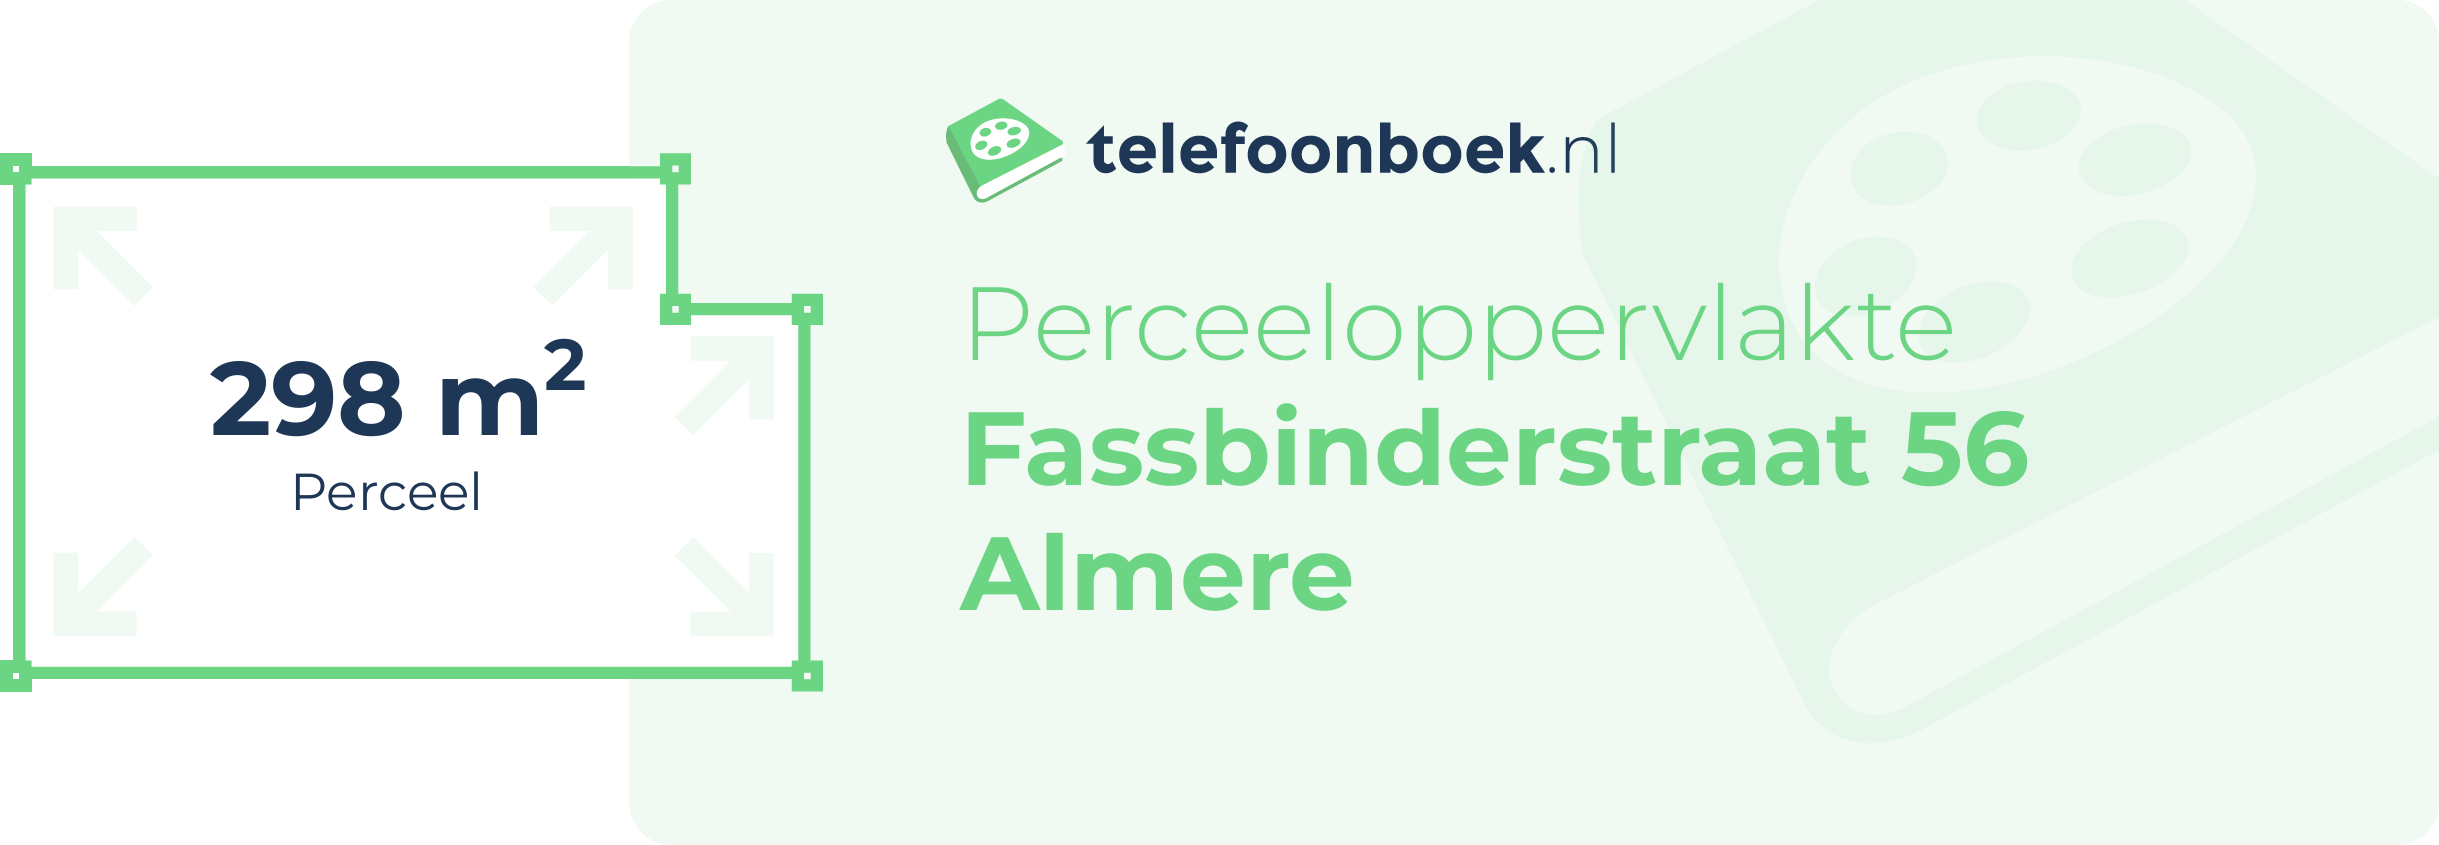 Perceeloppervlakte Fassbinderstraat 56 Almere